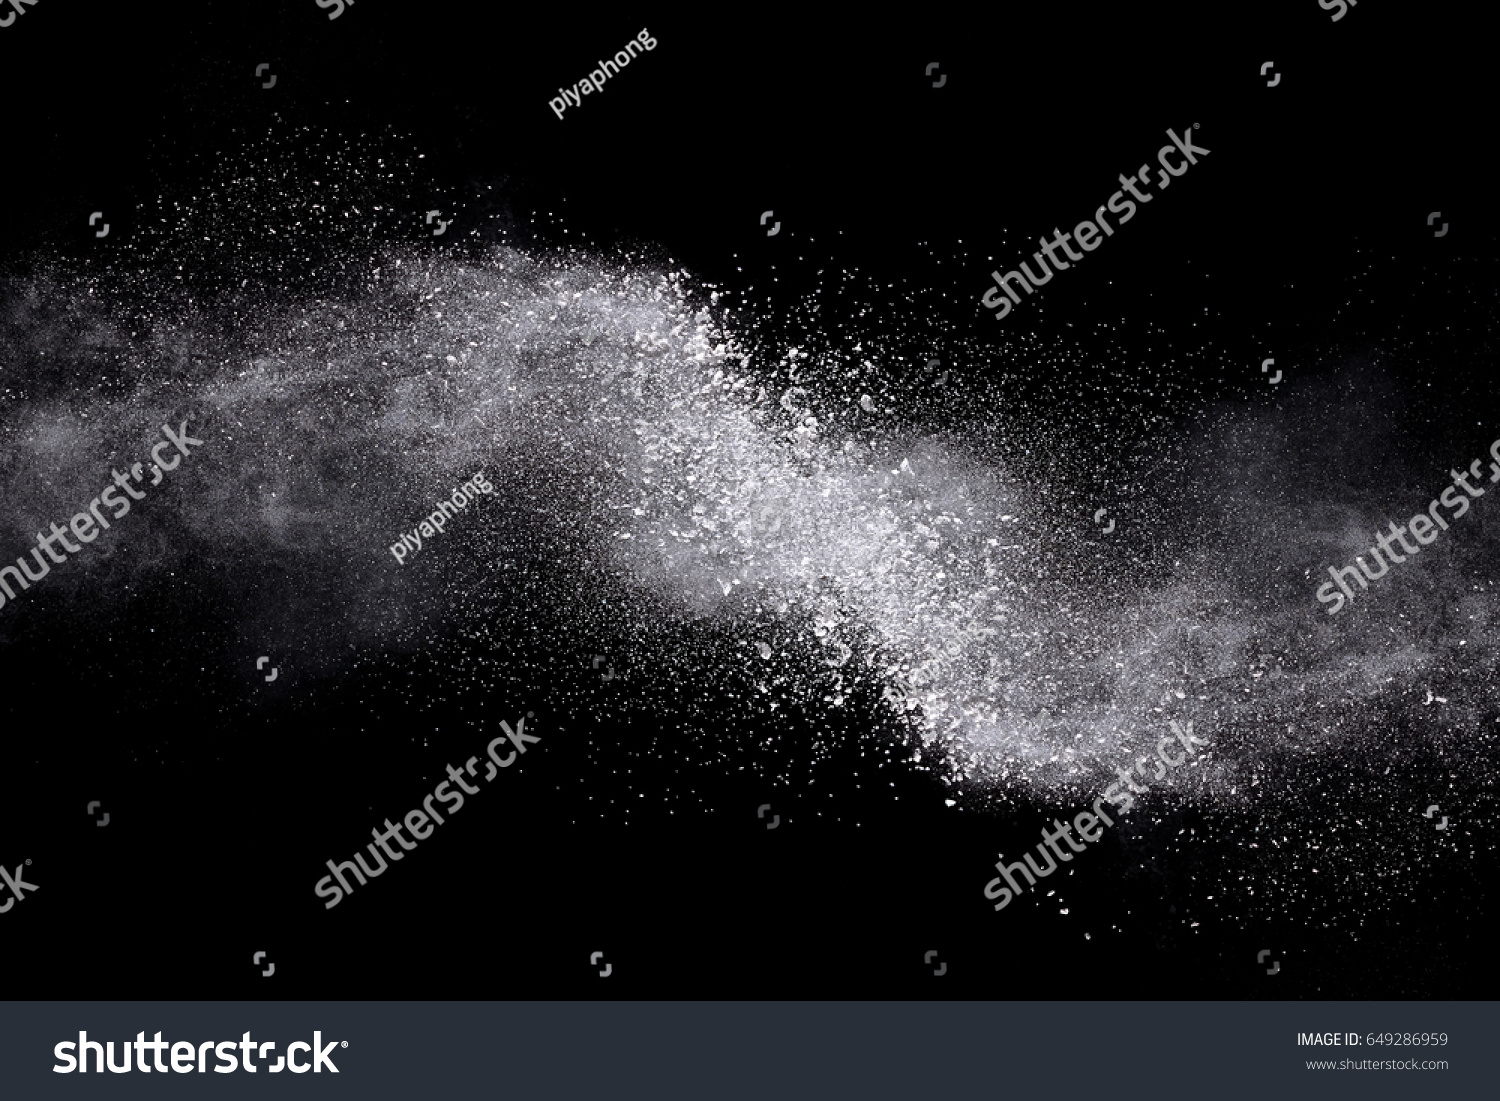 movement of white powder on black background. #649286959